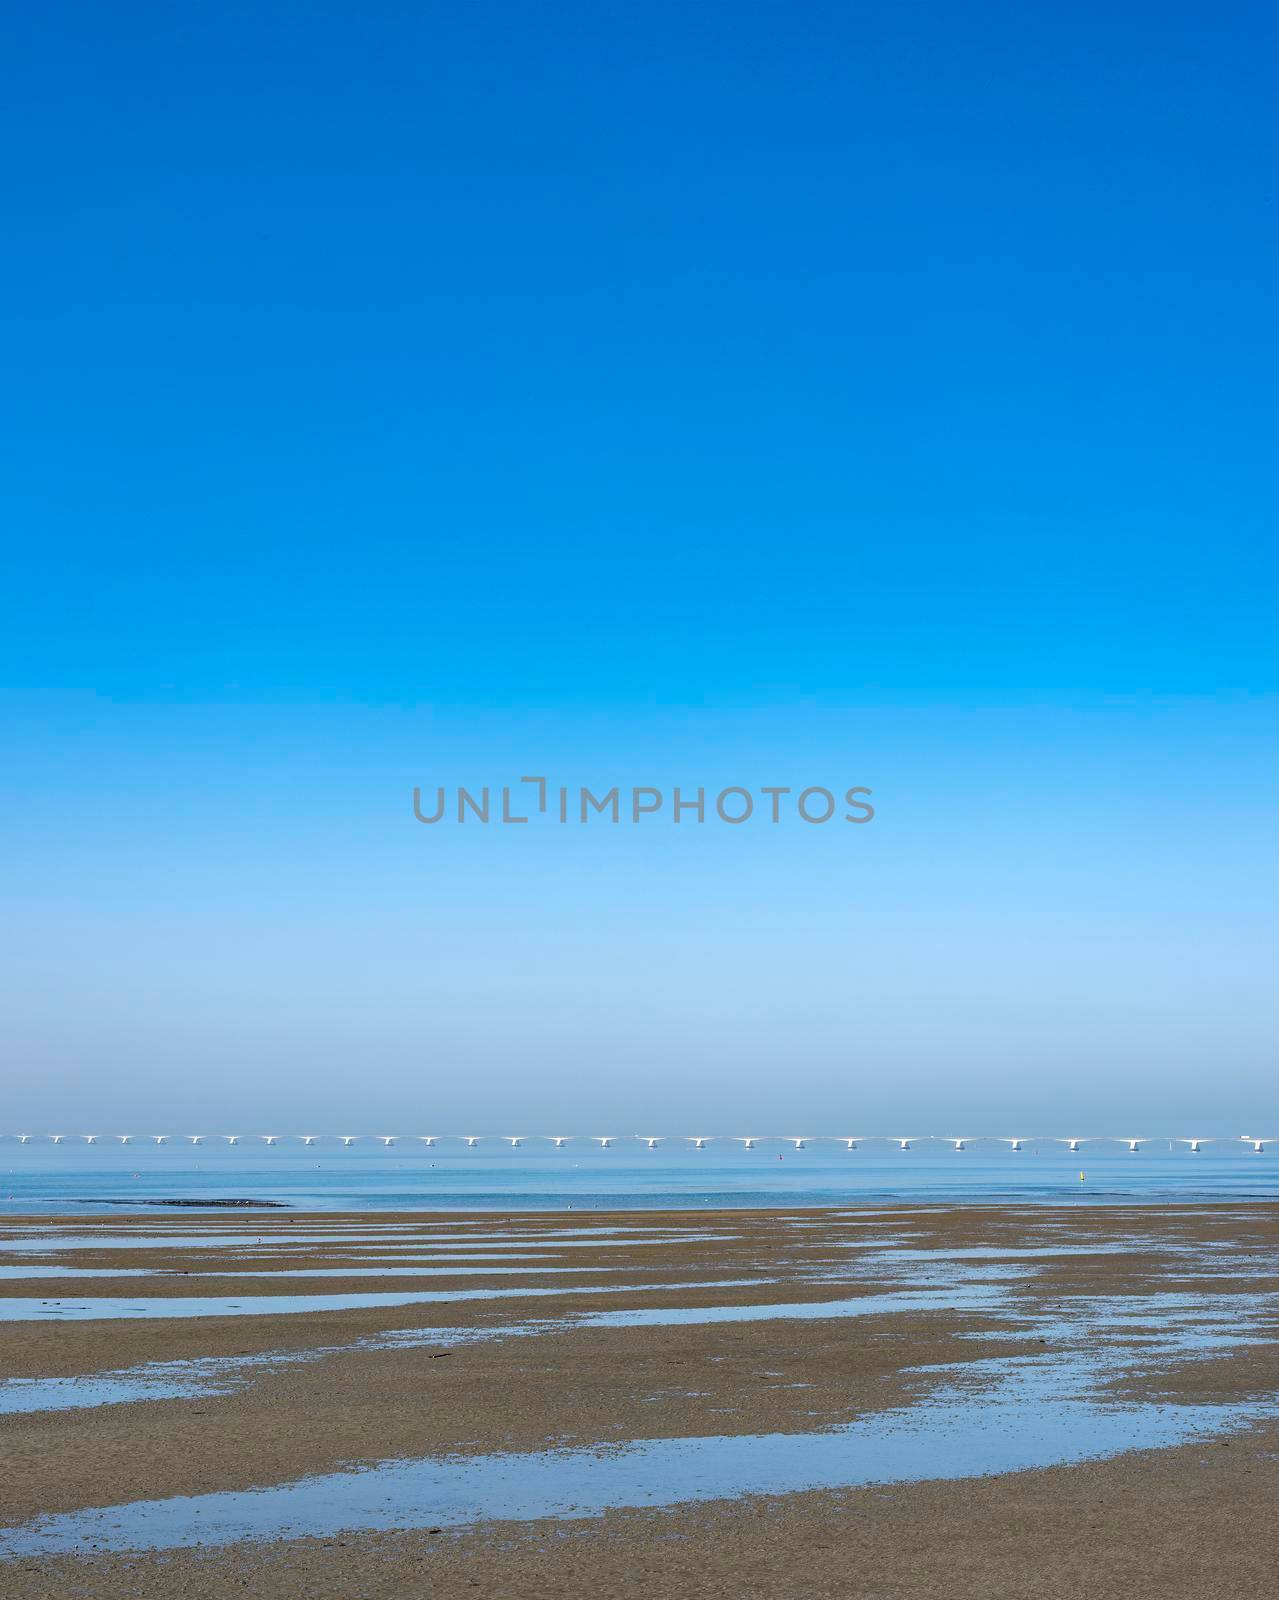 zeelandbrug under blue sky in water landscape of zeeland in the netherlands